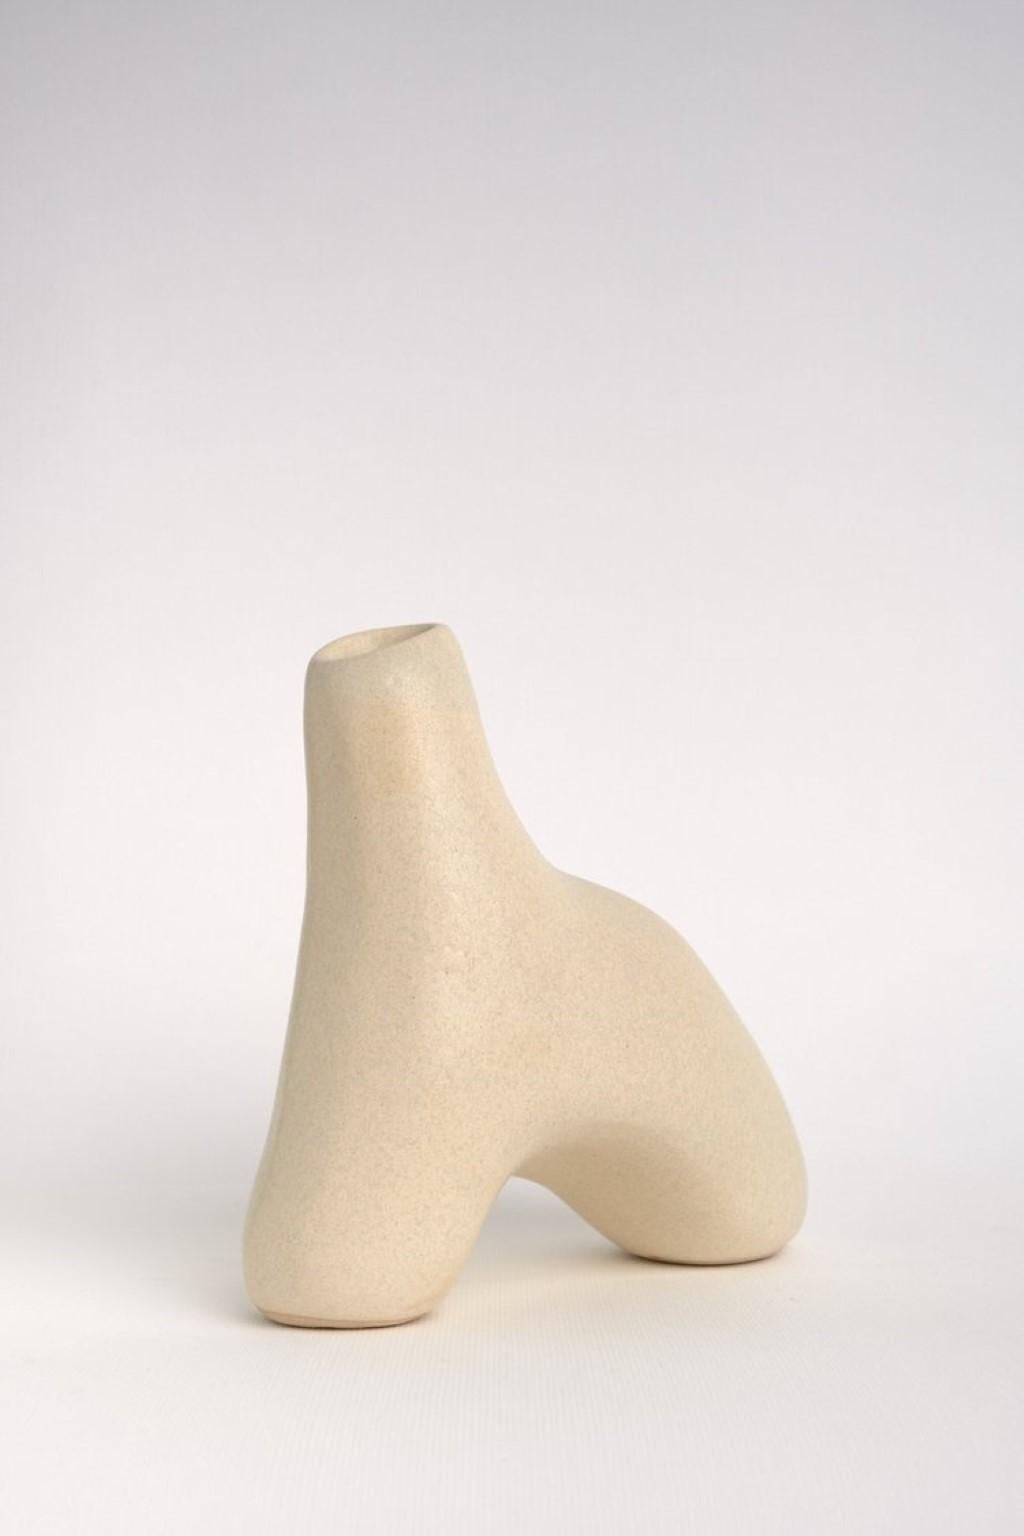 Modern Garrafa No. II Vase by Camila Apaez For Sale